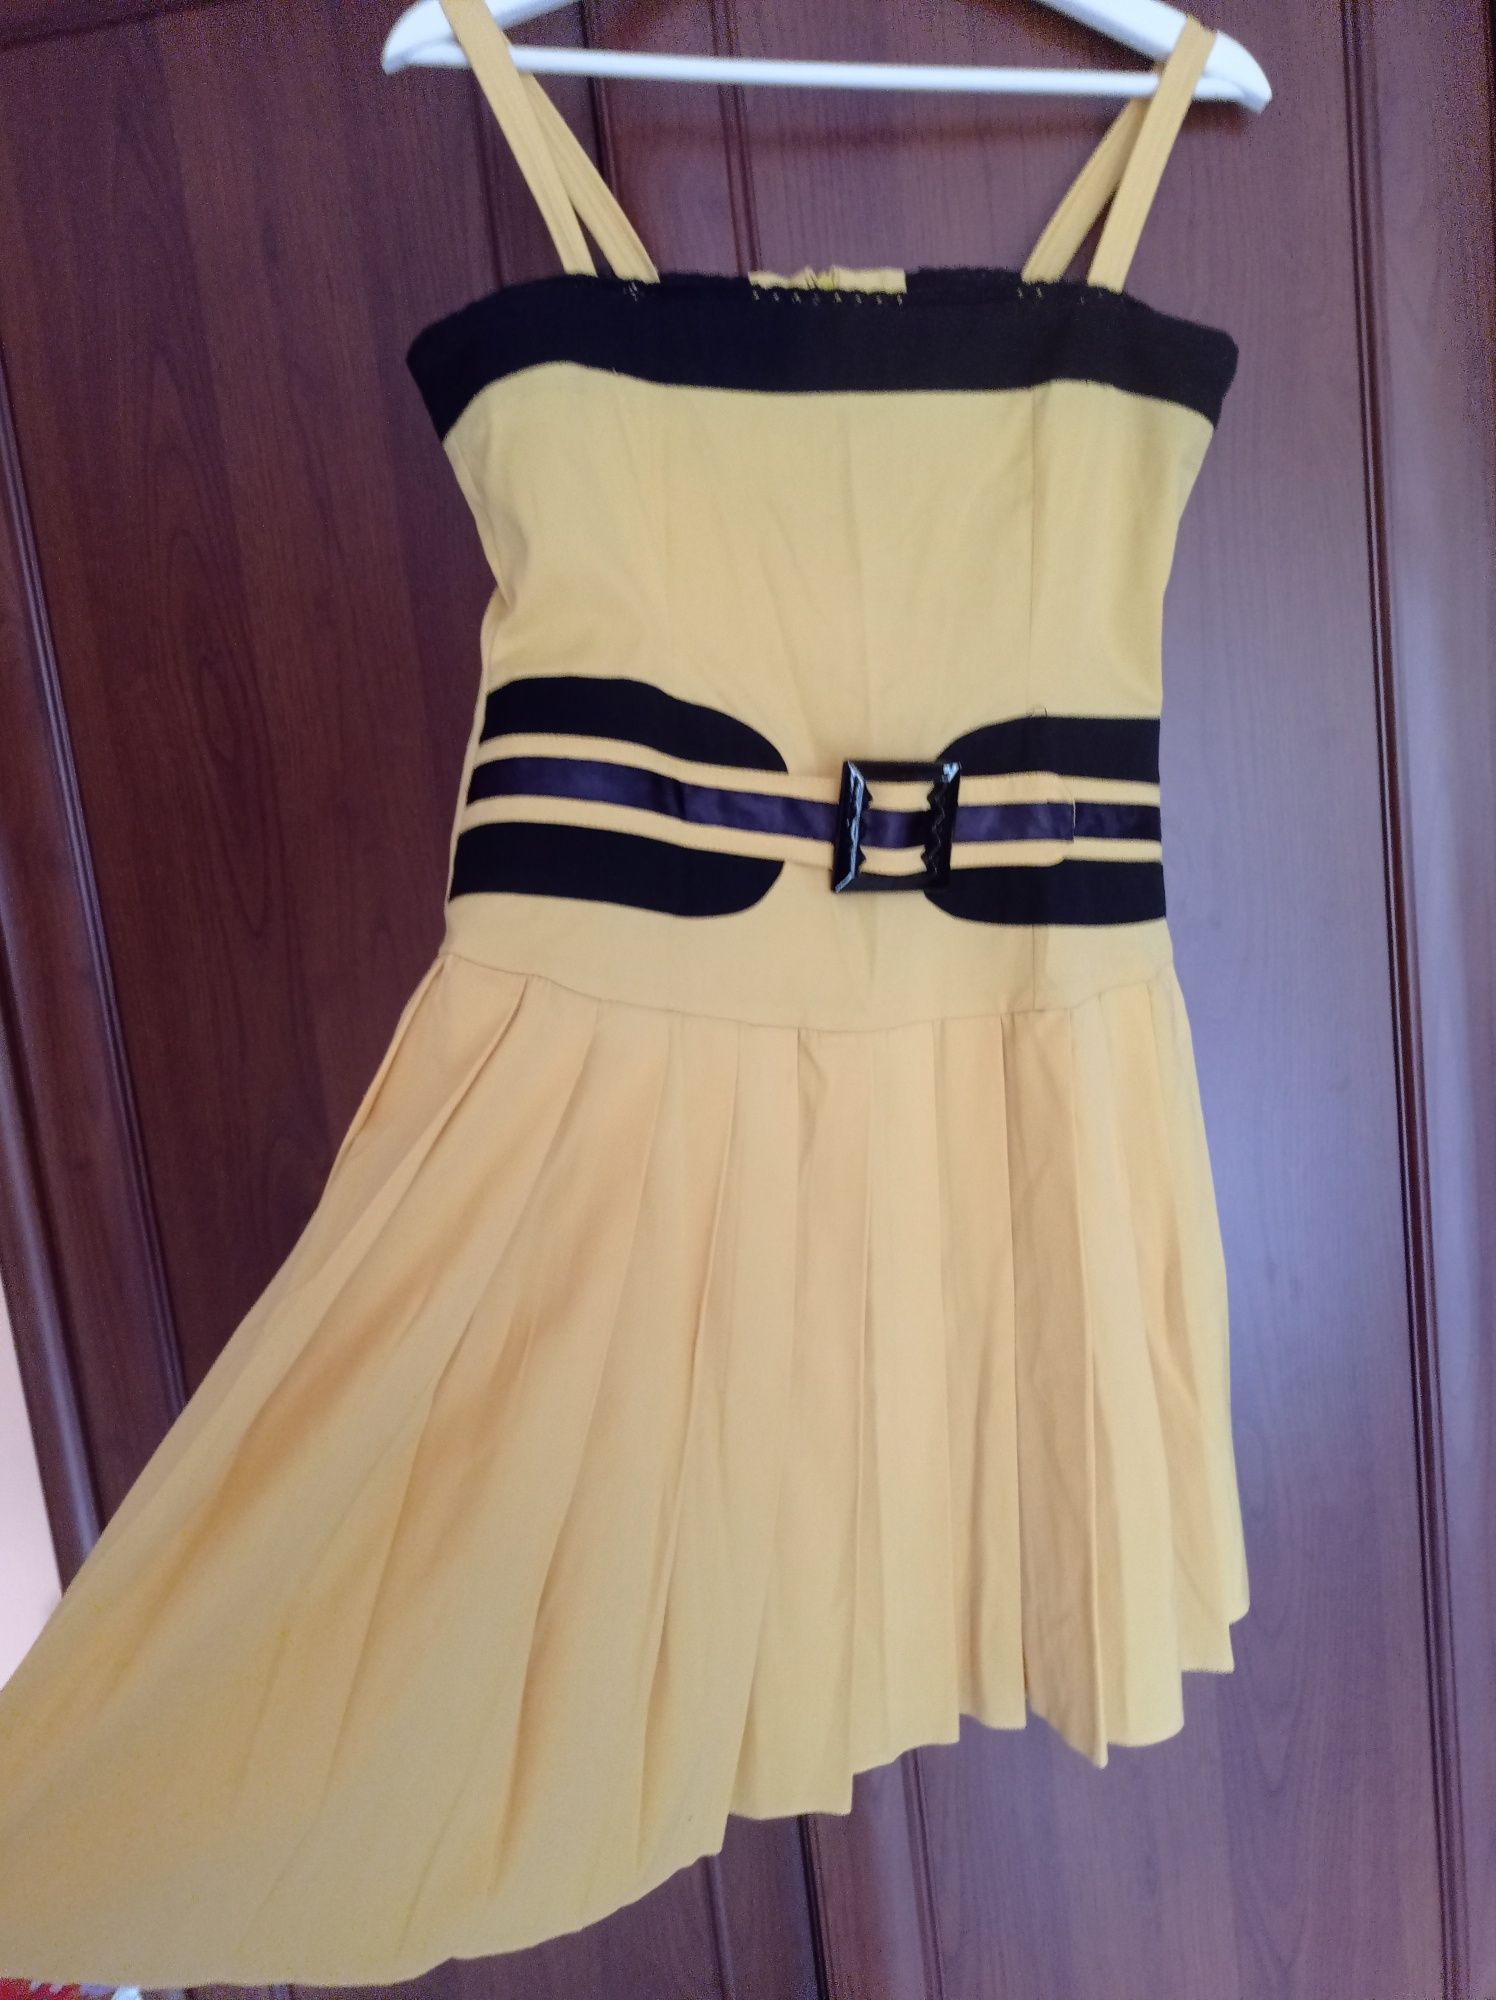 sukienka pszczółka żółto czarna na naramkach